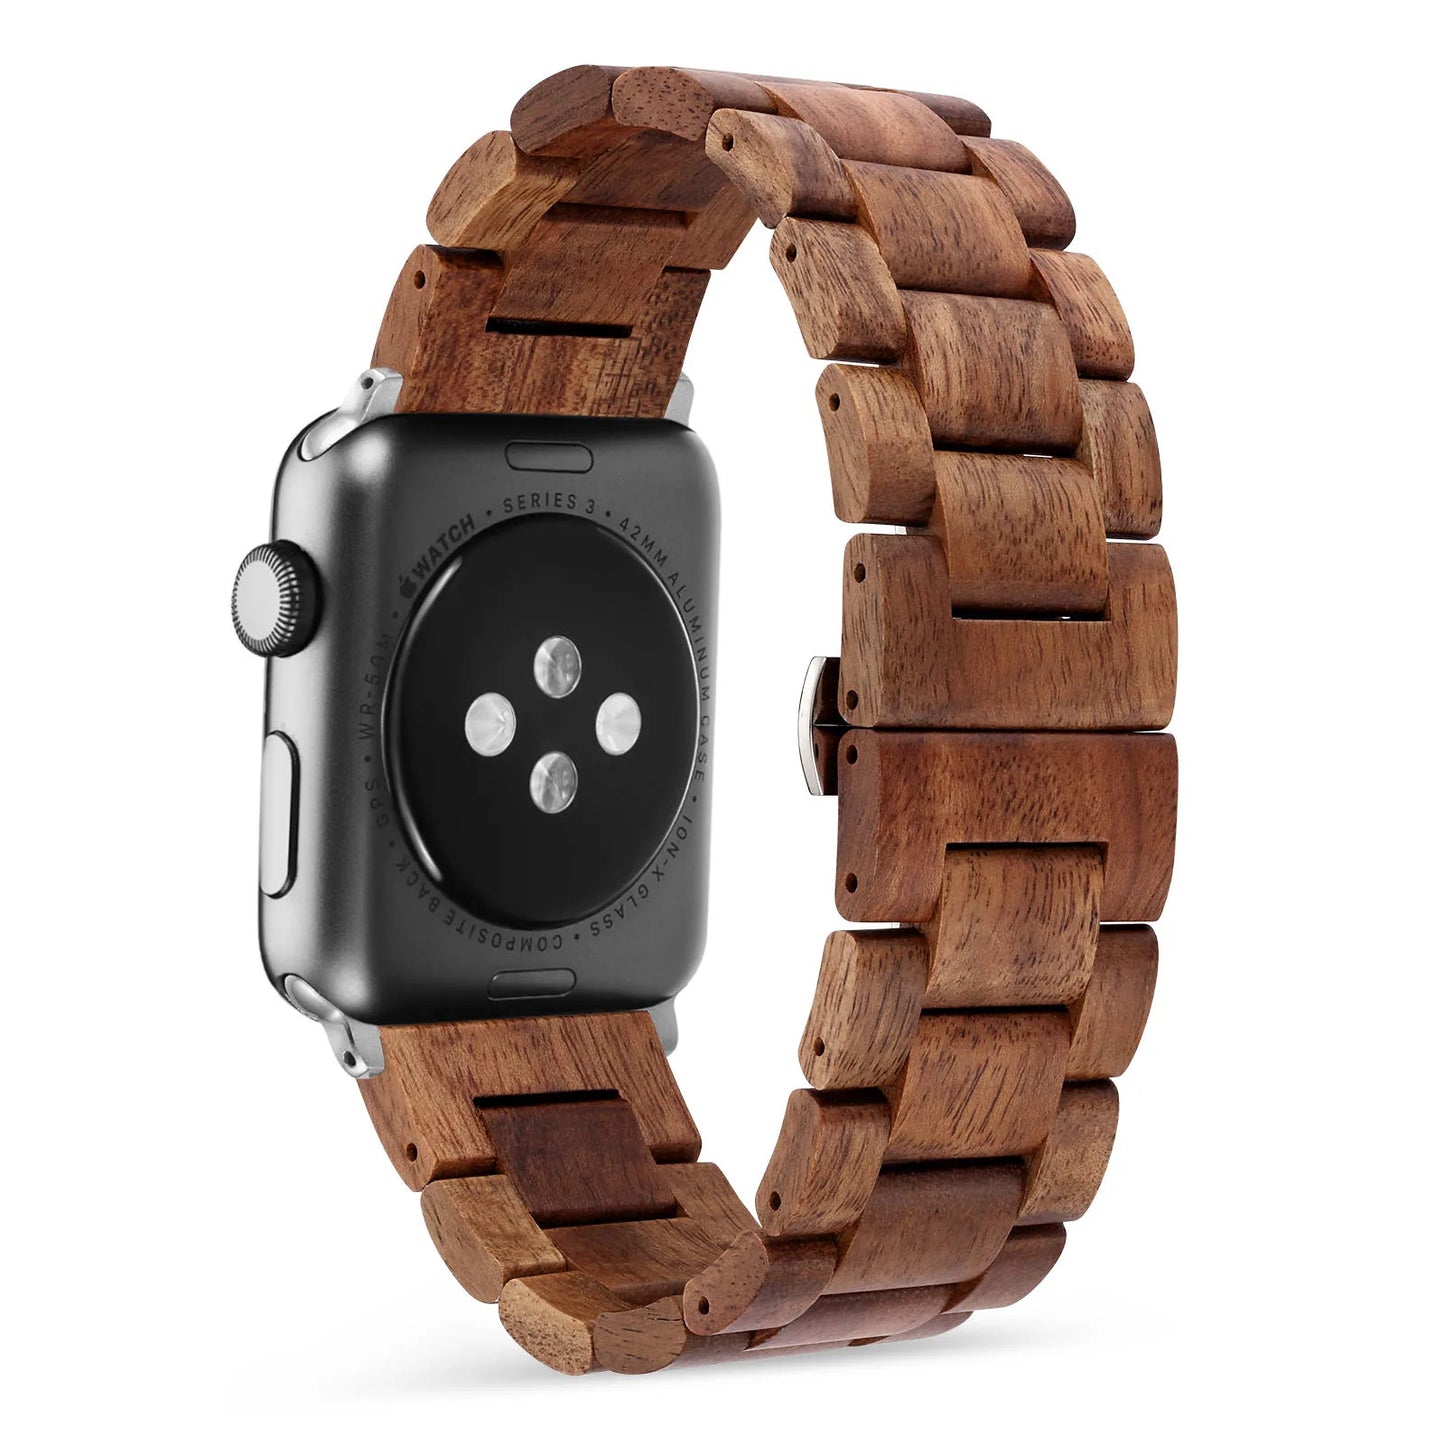 Back of Koa Wood Apple Watch Band